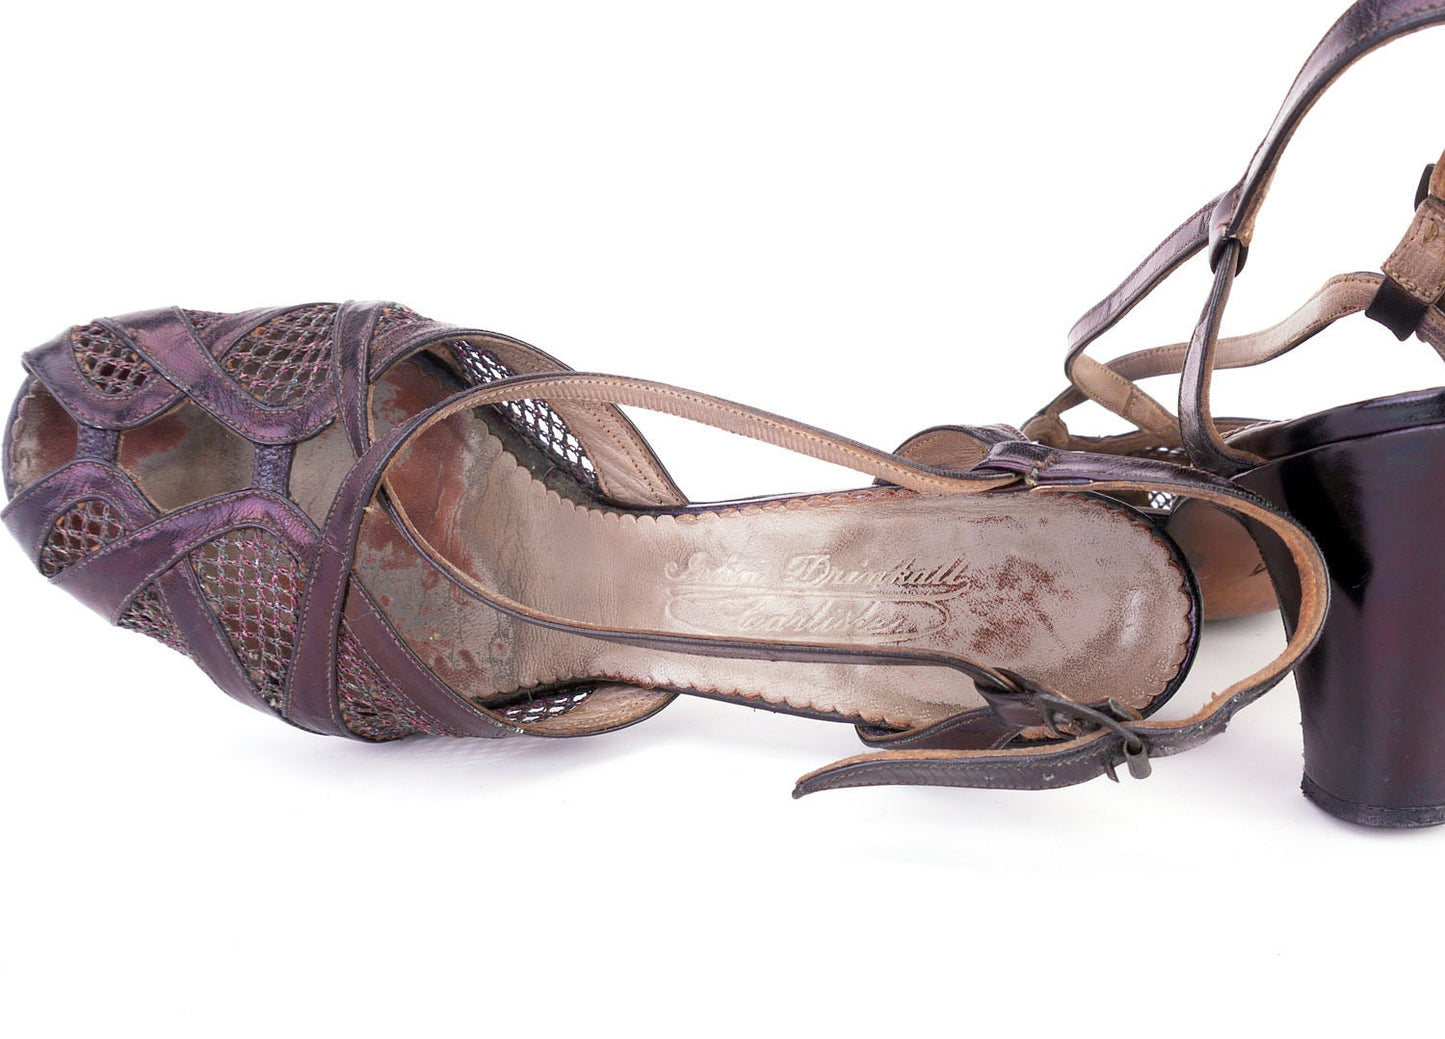 1950s Metallic Purple Strappy Evening Sandals UK 4